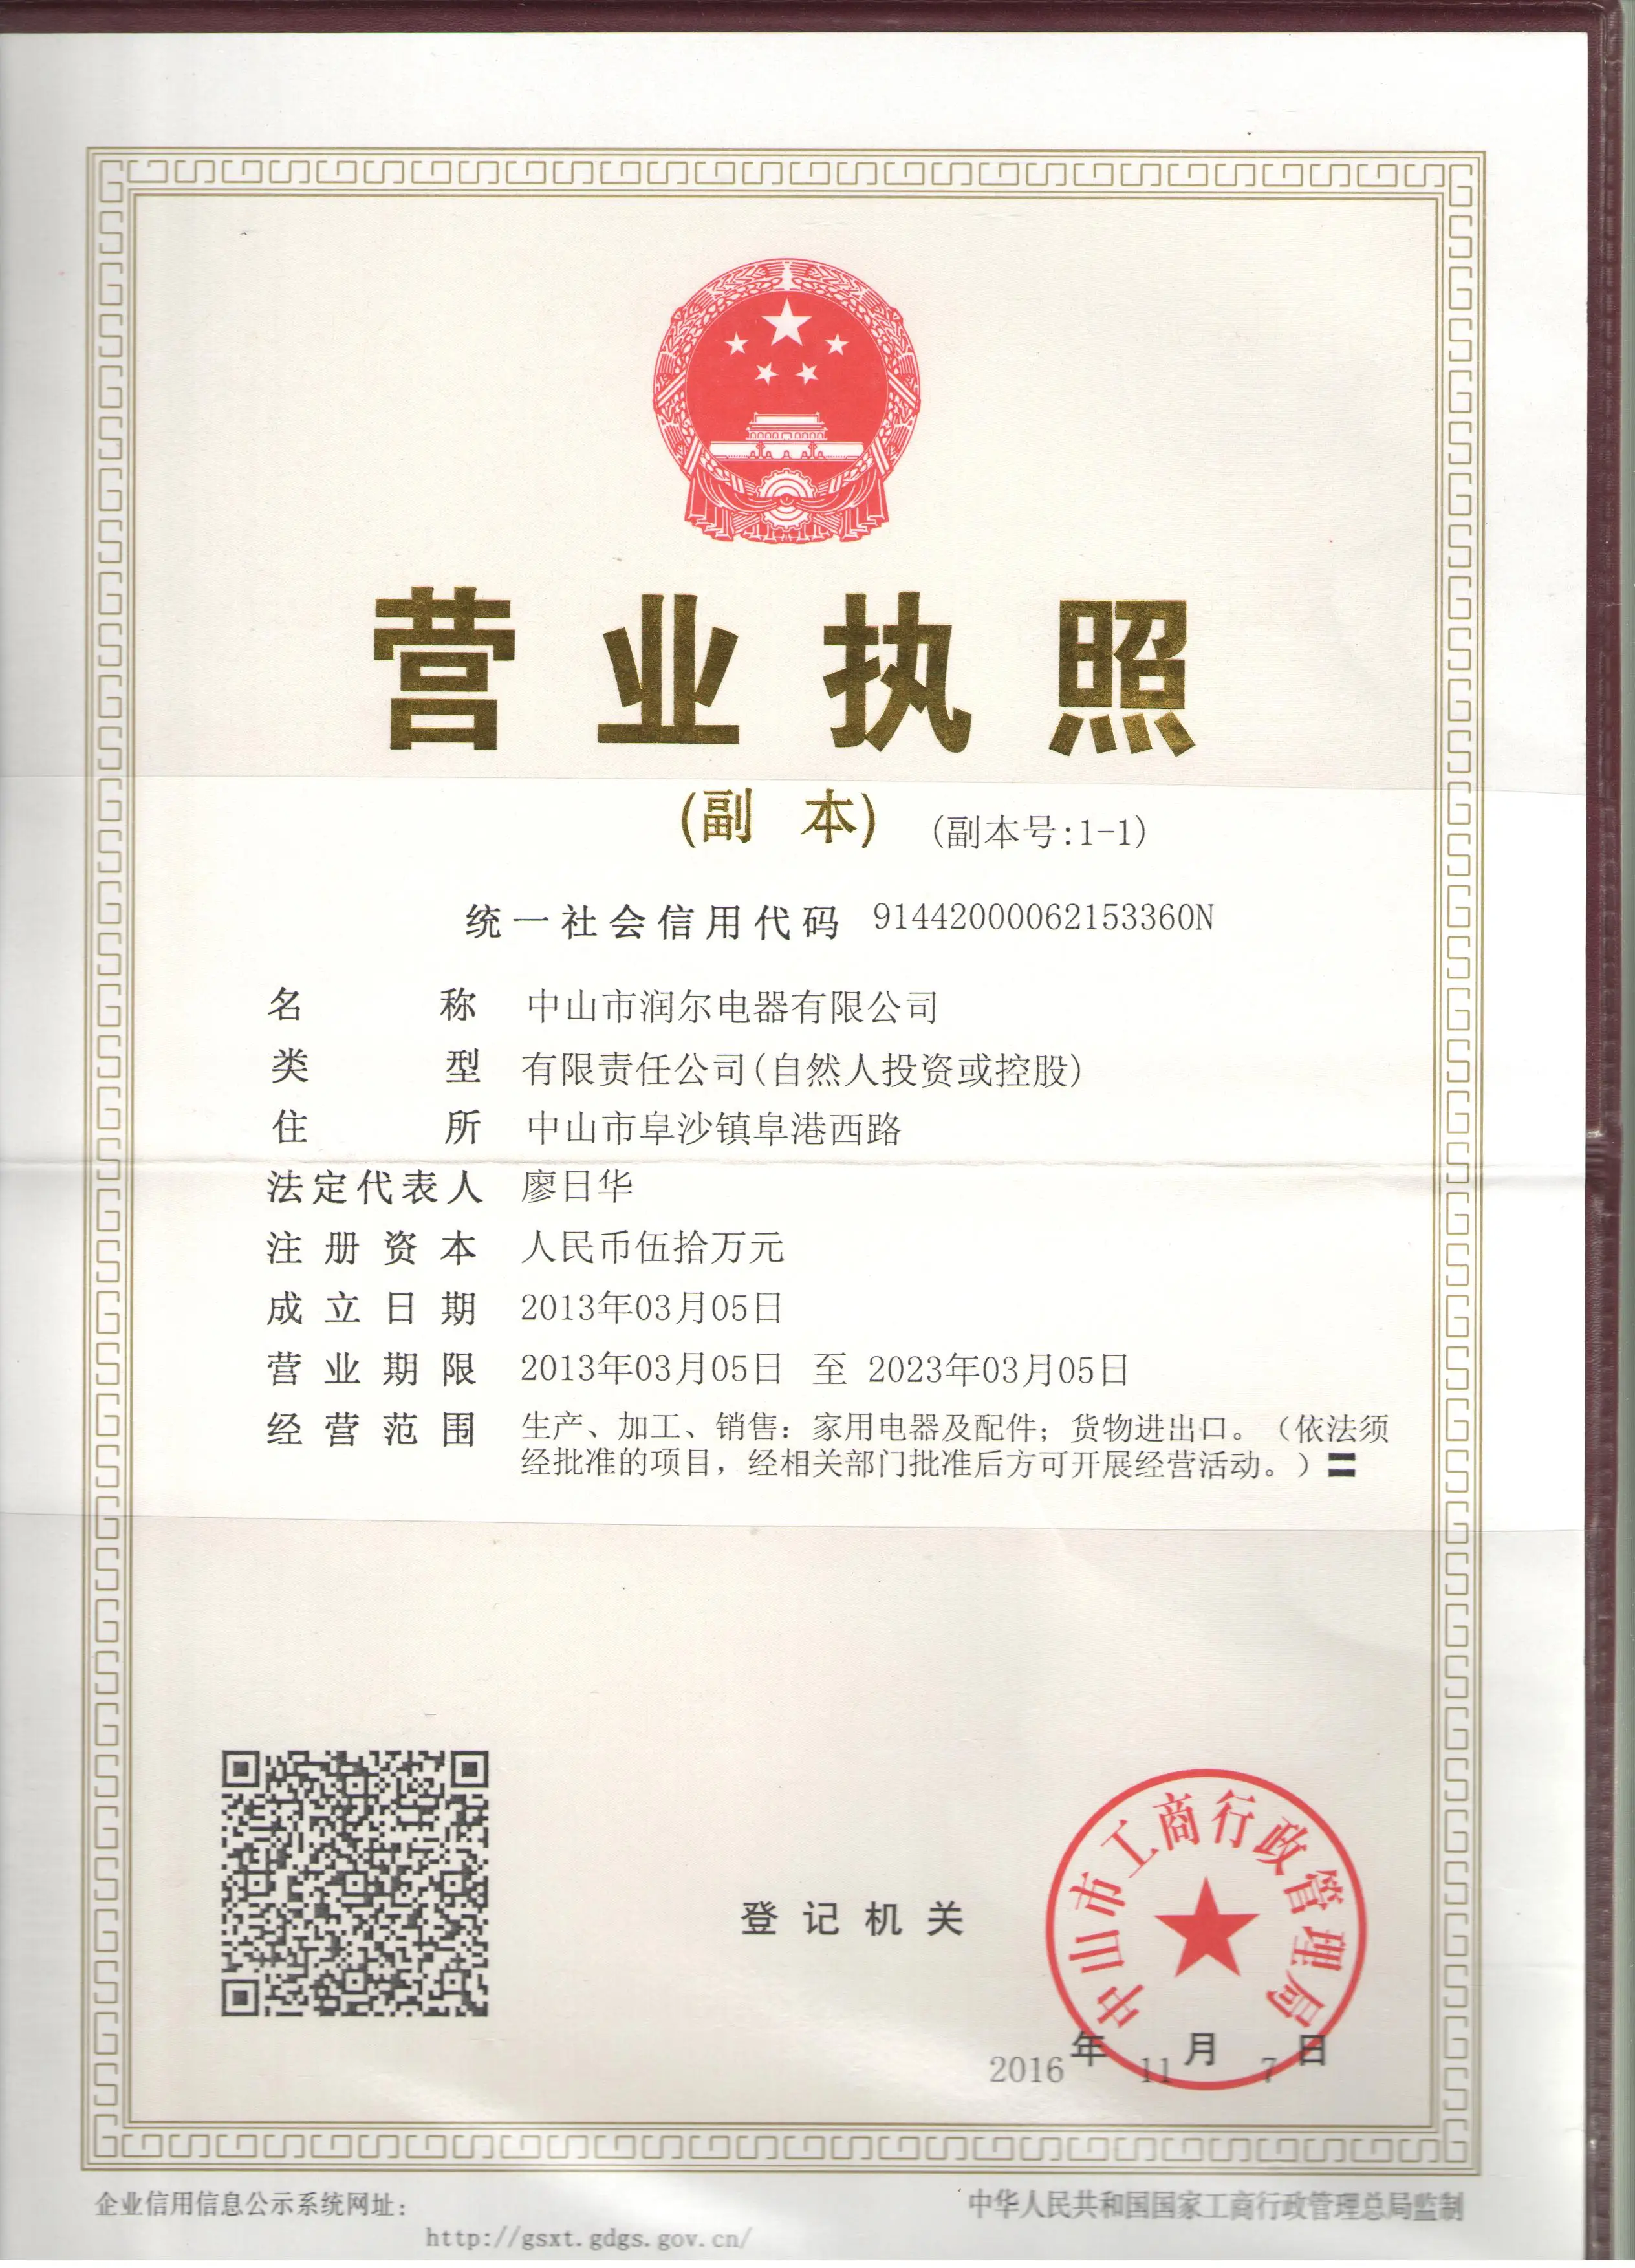 Company Overview - Zhongshan Runal Electric Co., Ltd.